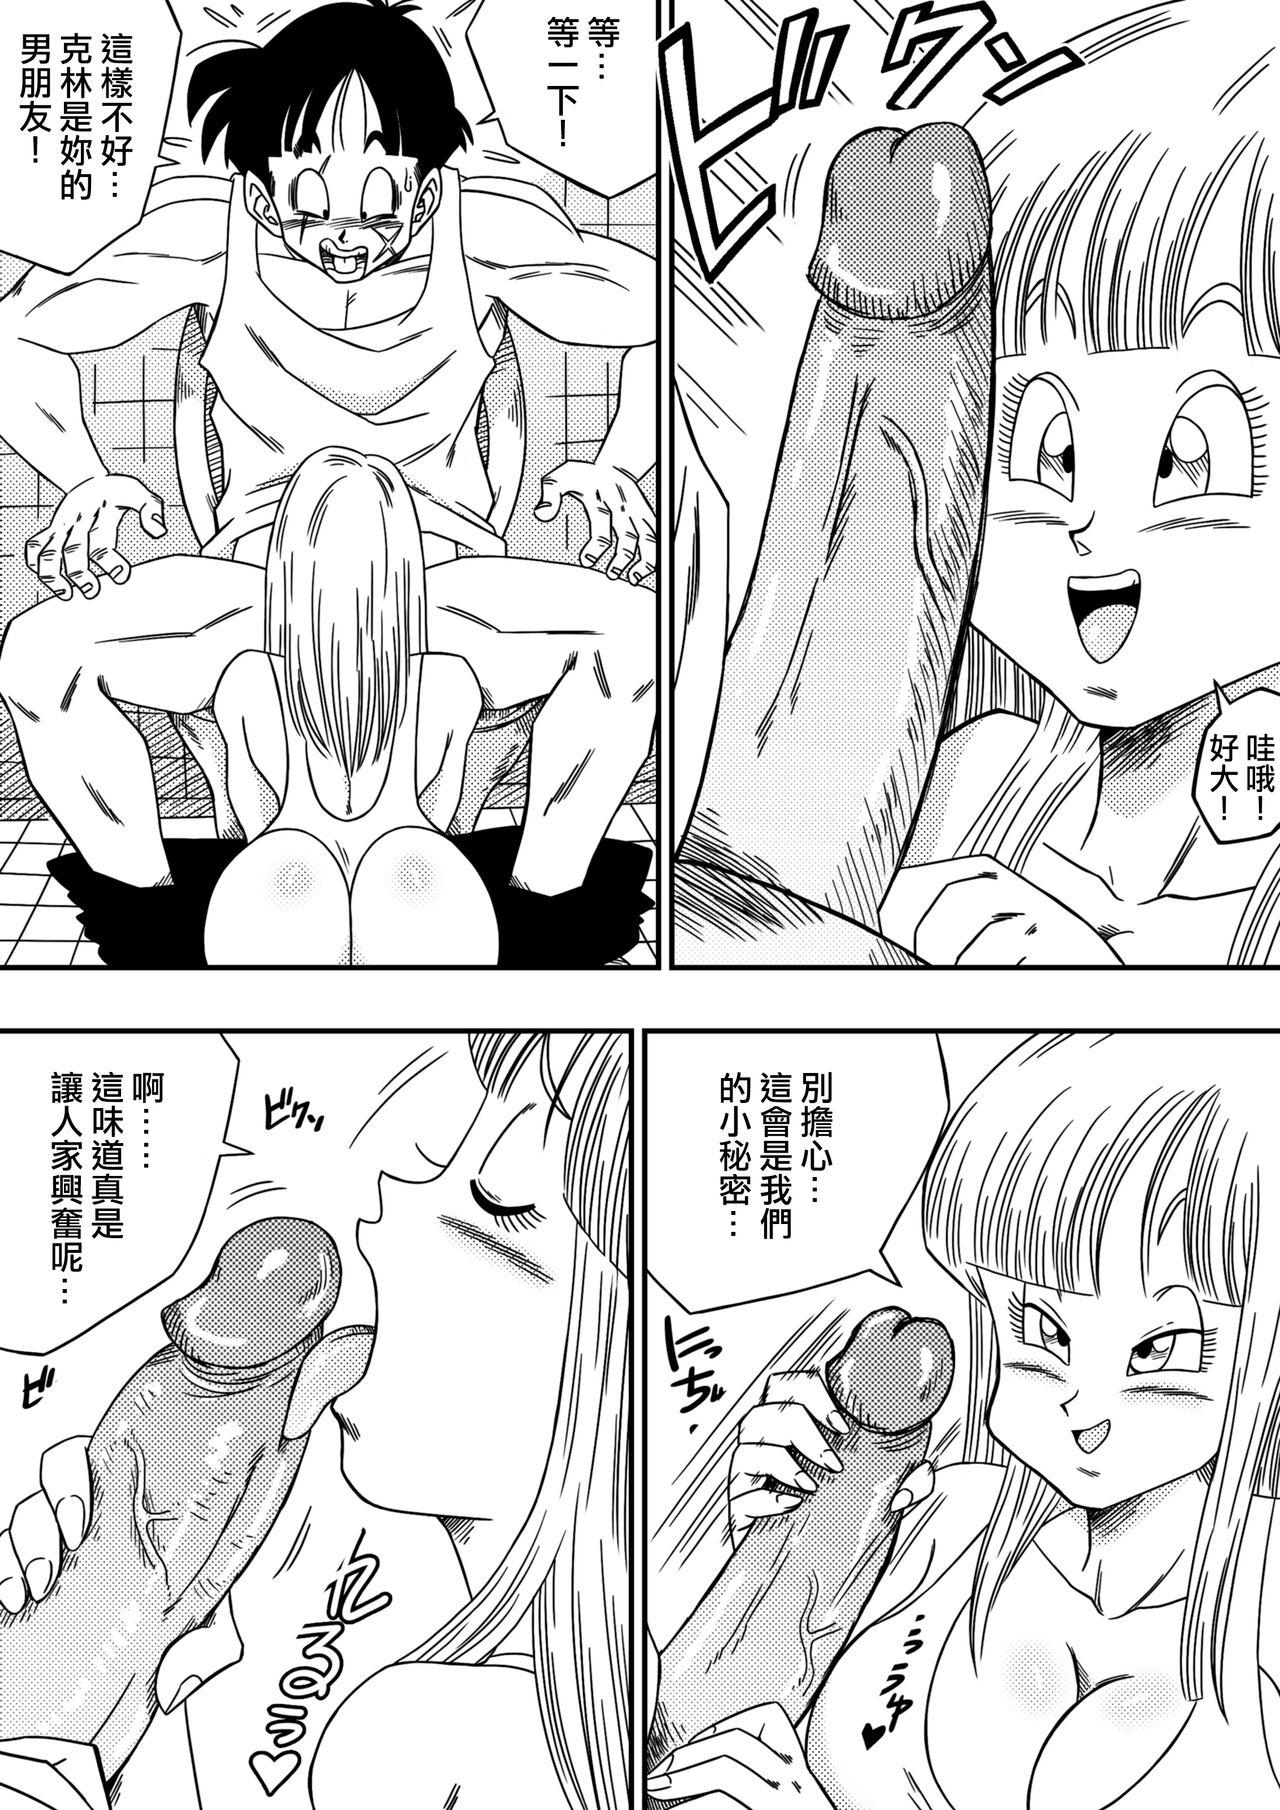 Jockstrap BITCH GIRLFRIEND - Dragon ball z Gordinha - Page 7